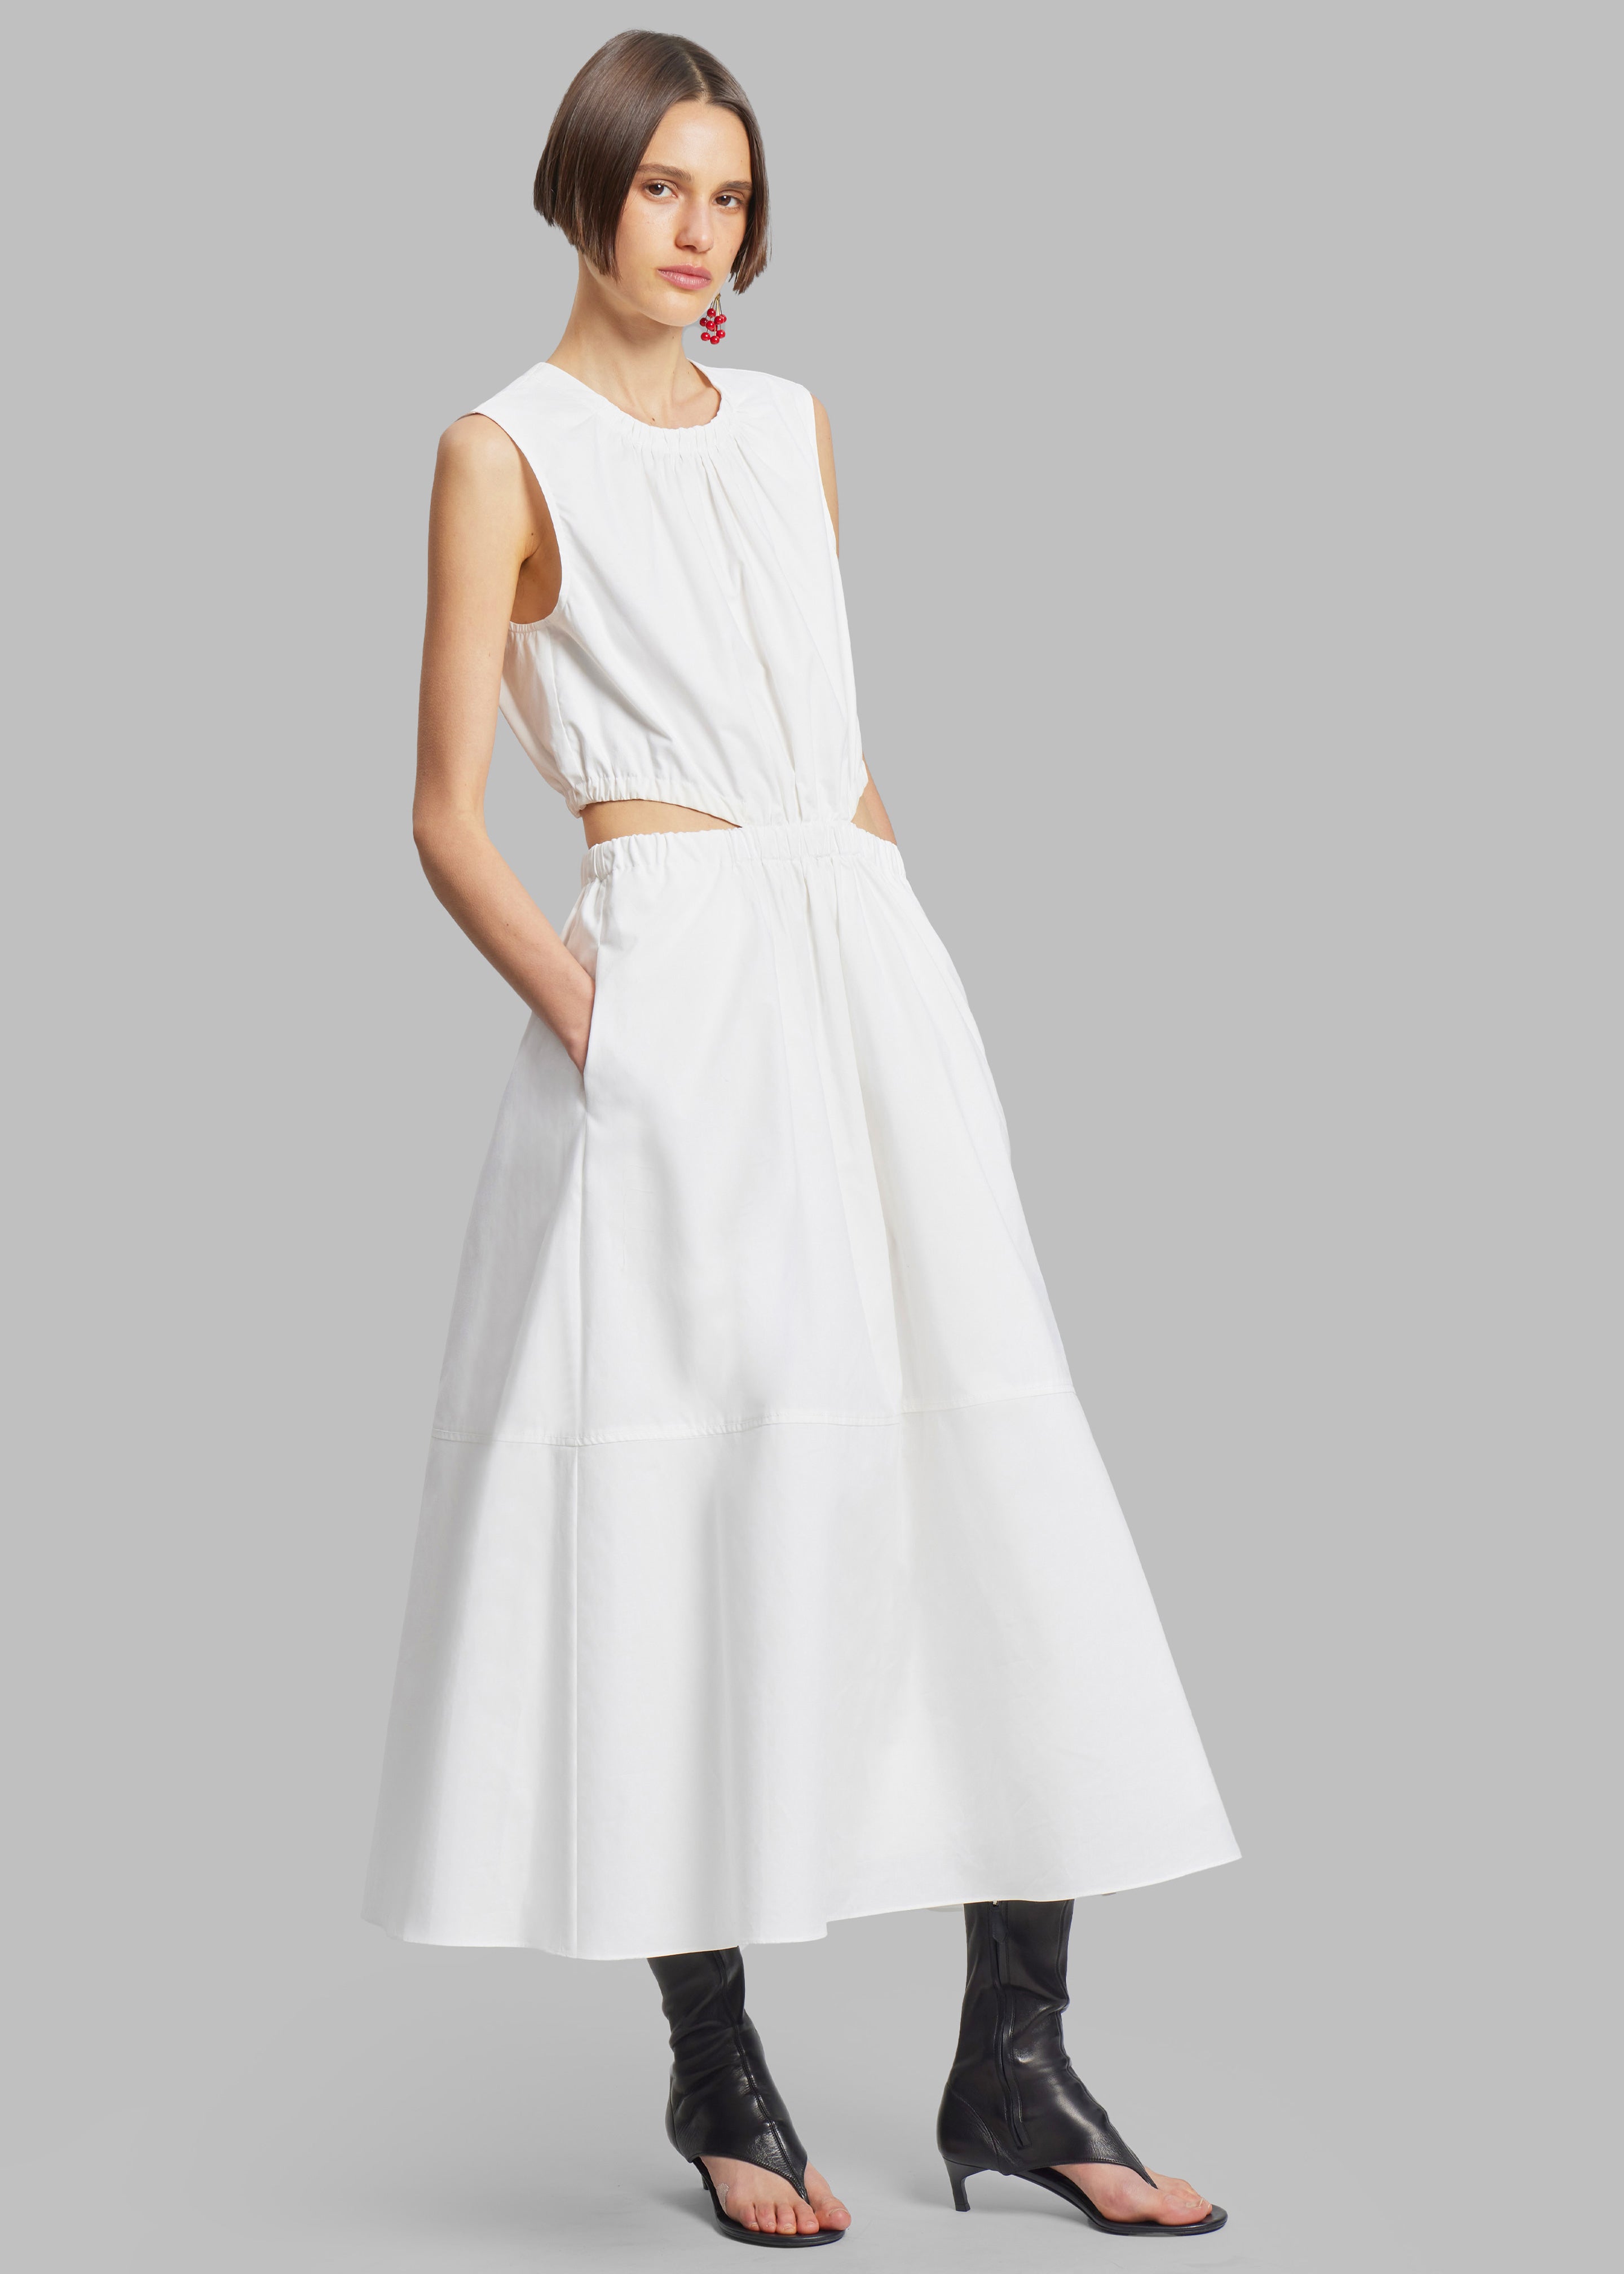 Proenza Schouler White Label Poplin Cutout Midi Dress - Off White - 4